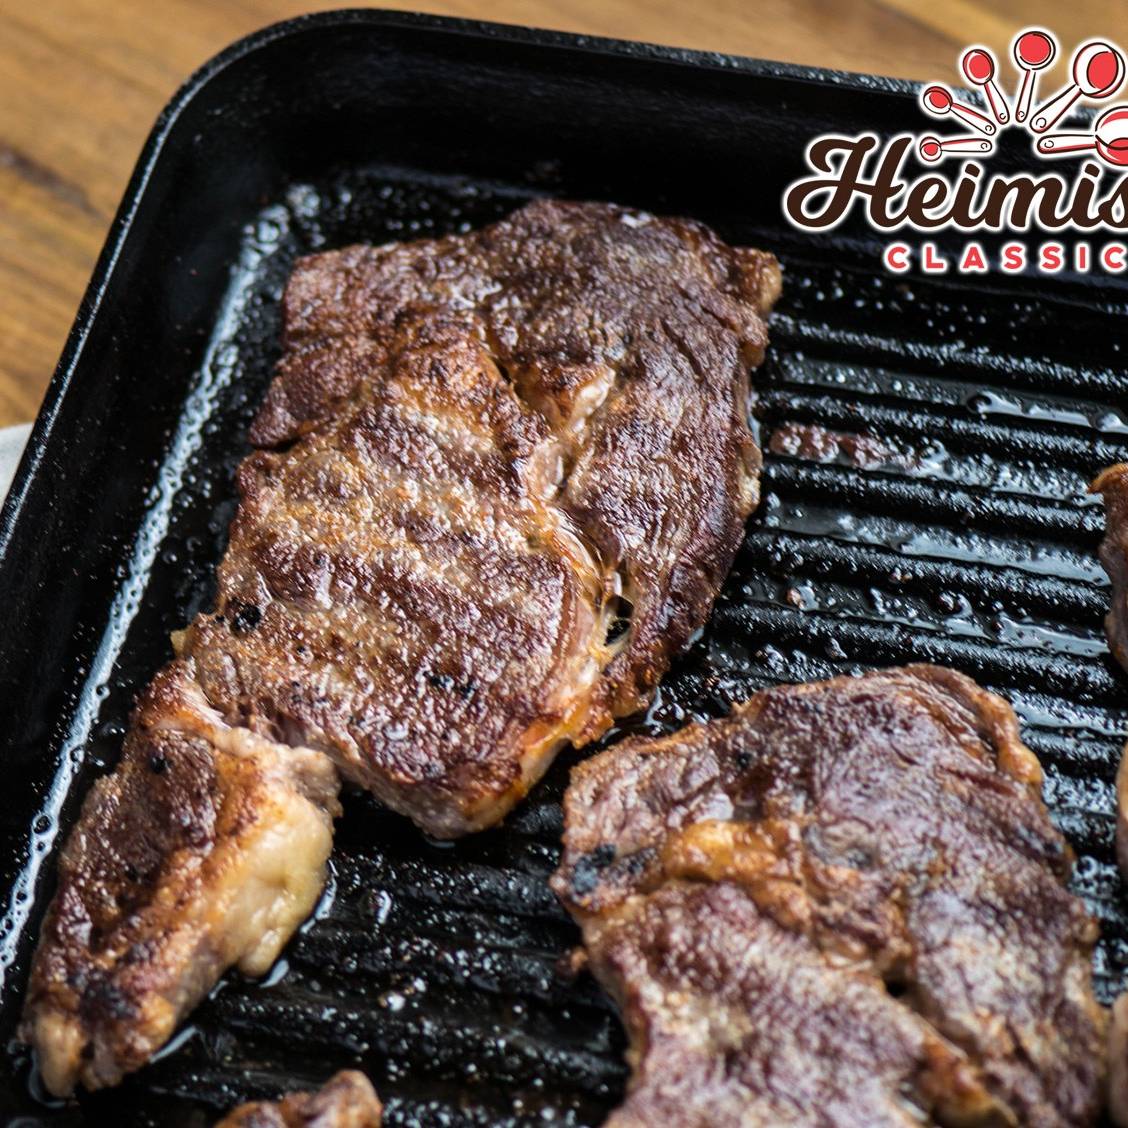 PanBroiled Minute Steak or Rib Steak Recipes